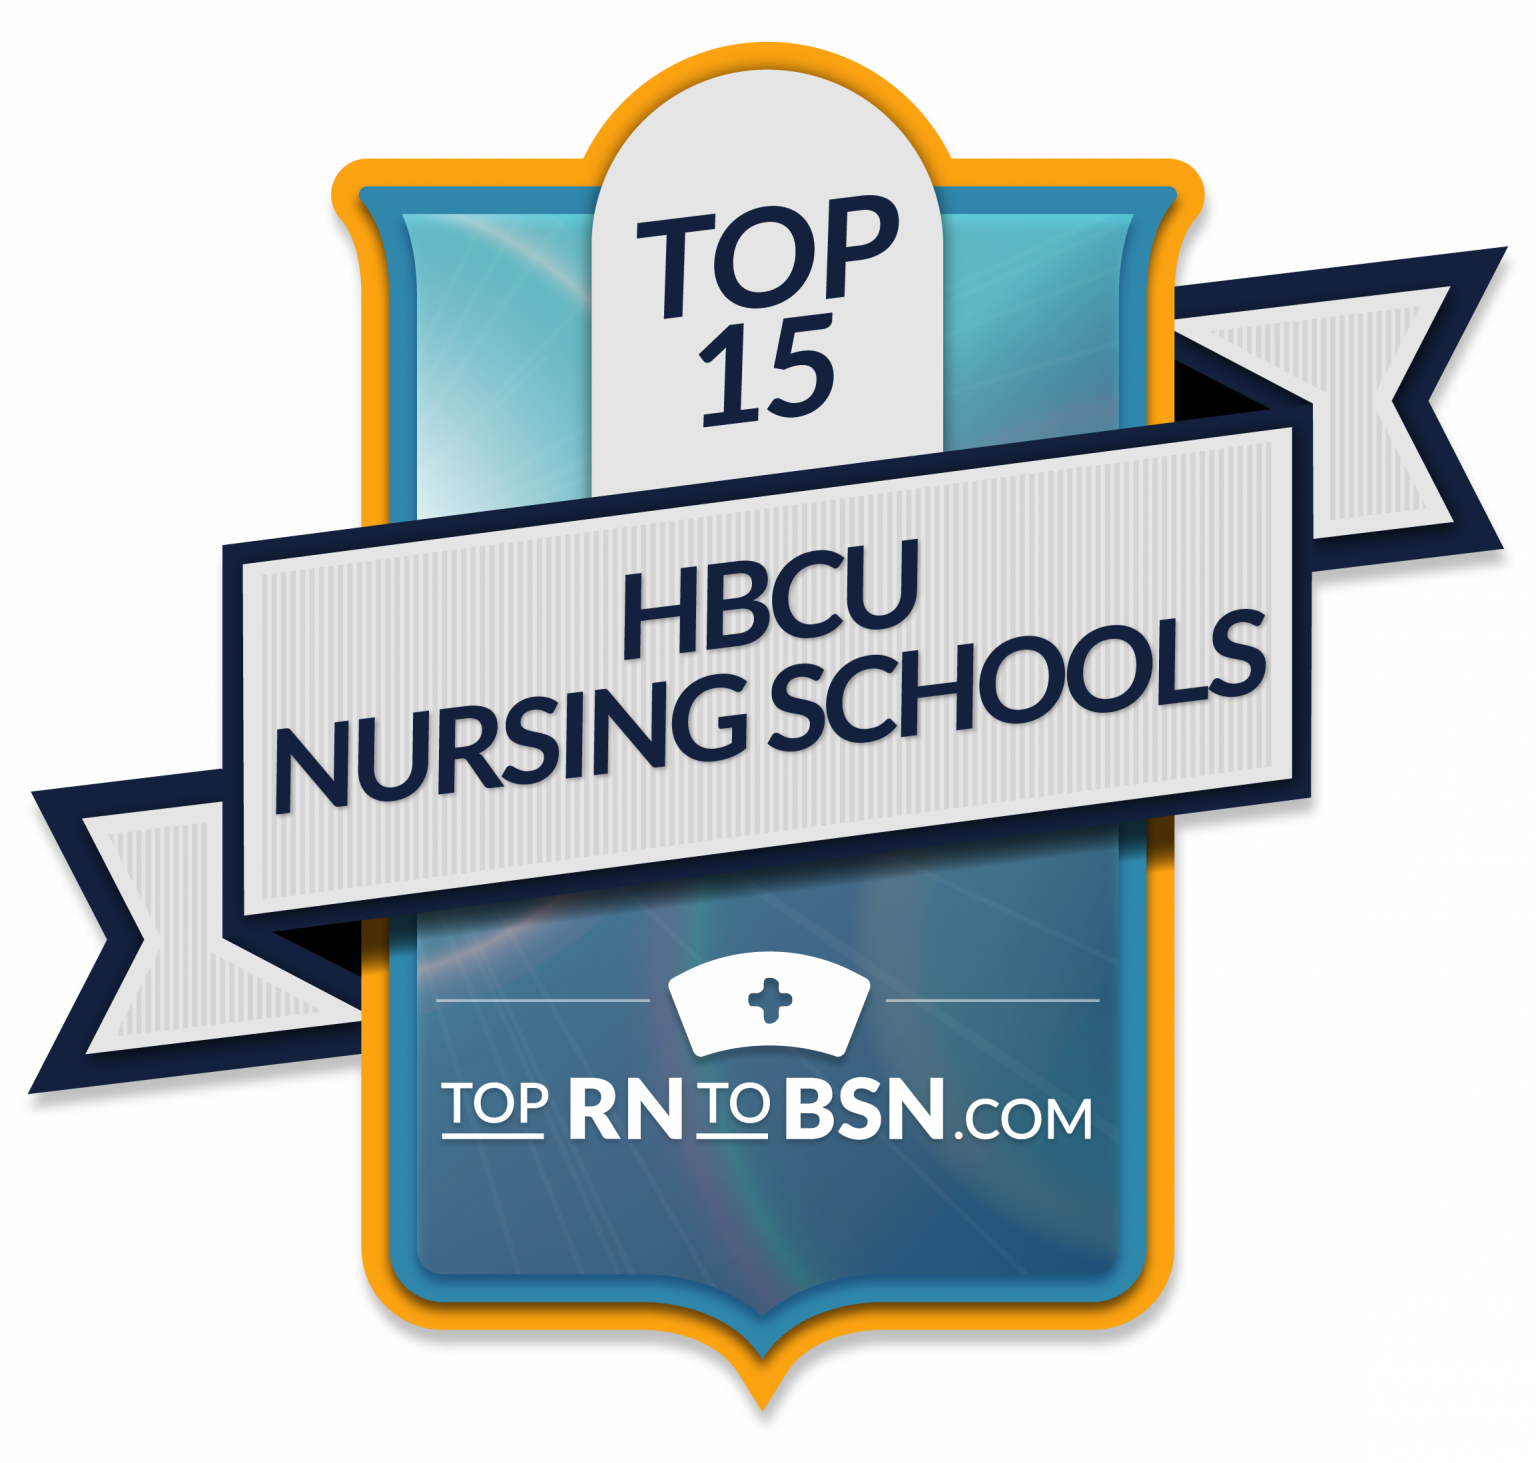 Best HBCU for Nursing Colleges and Schools